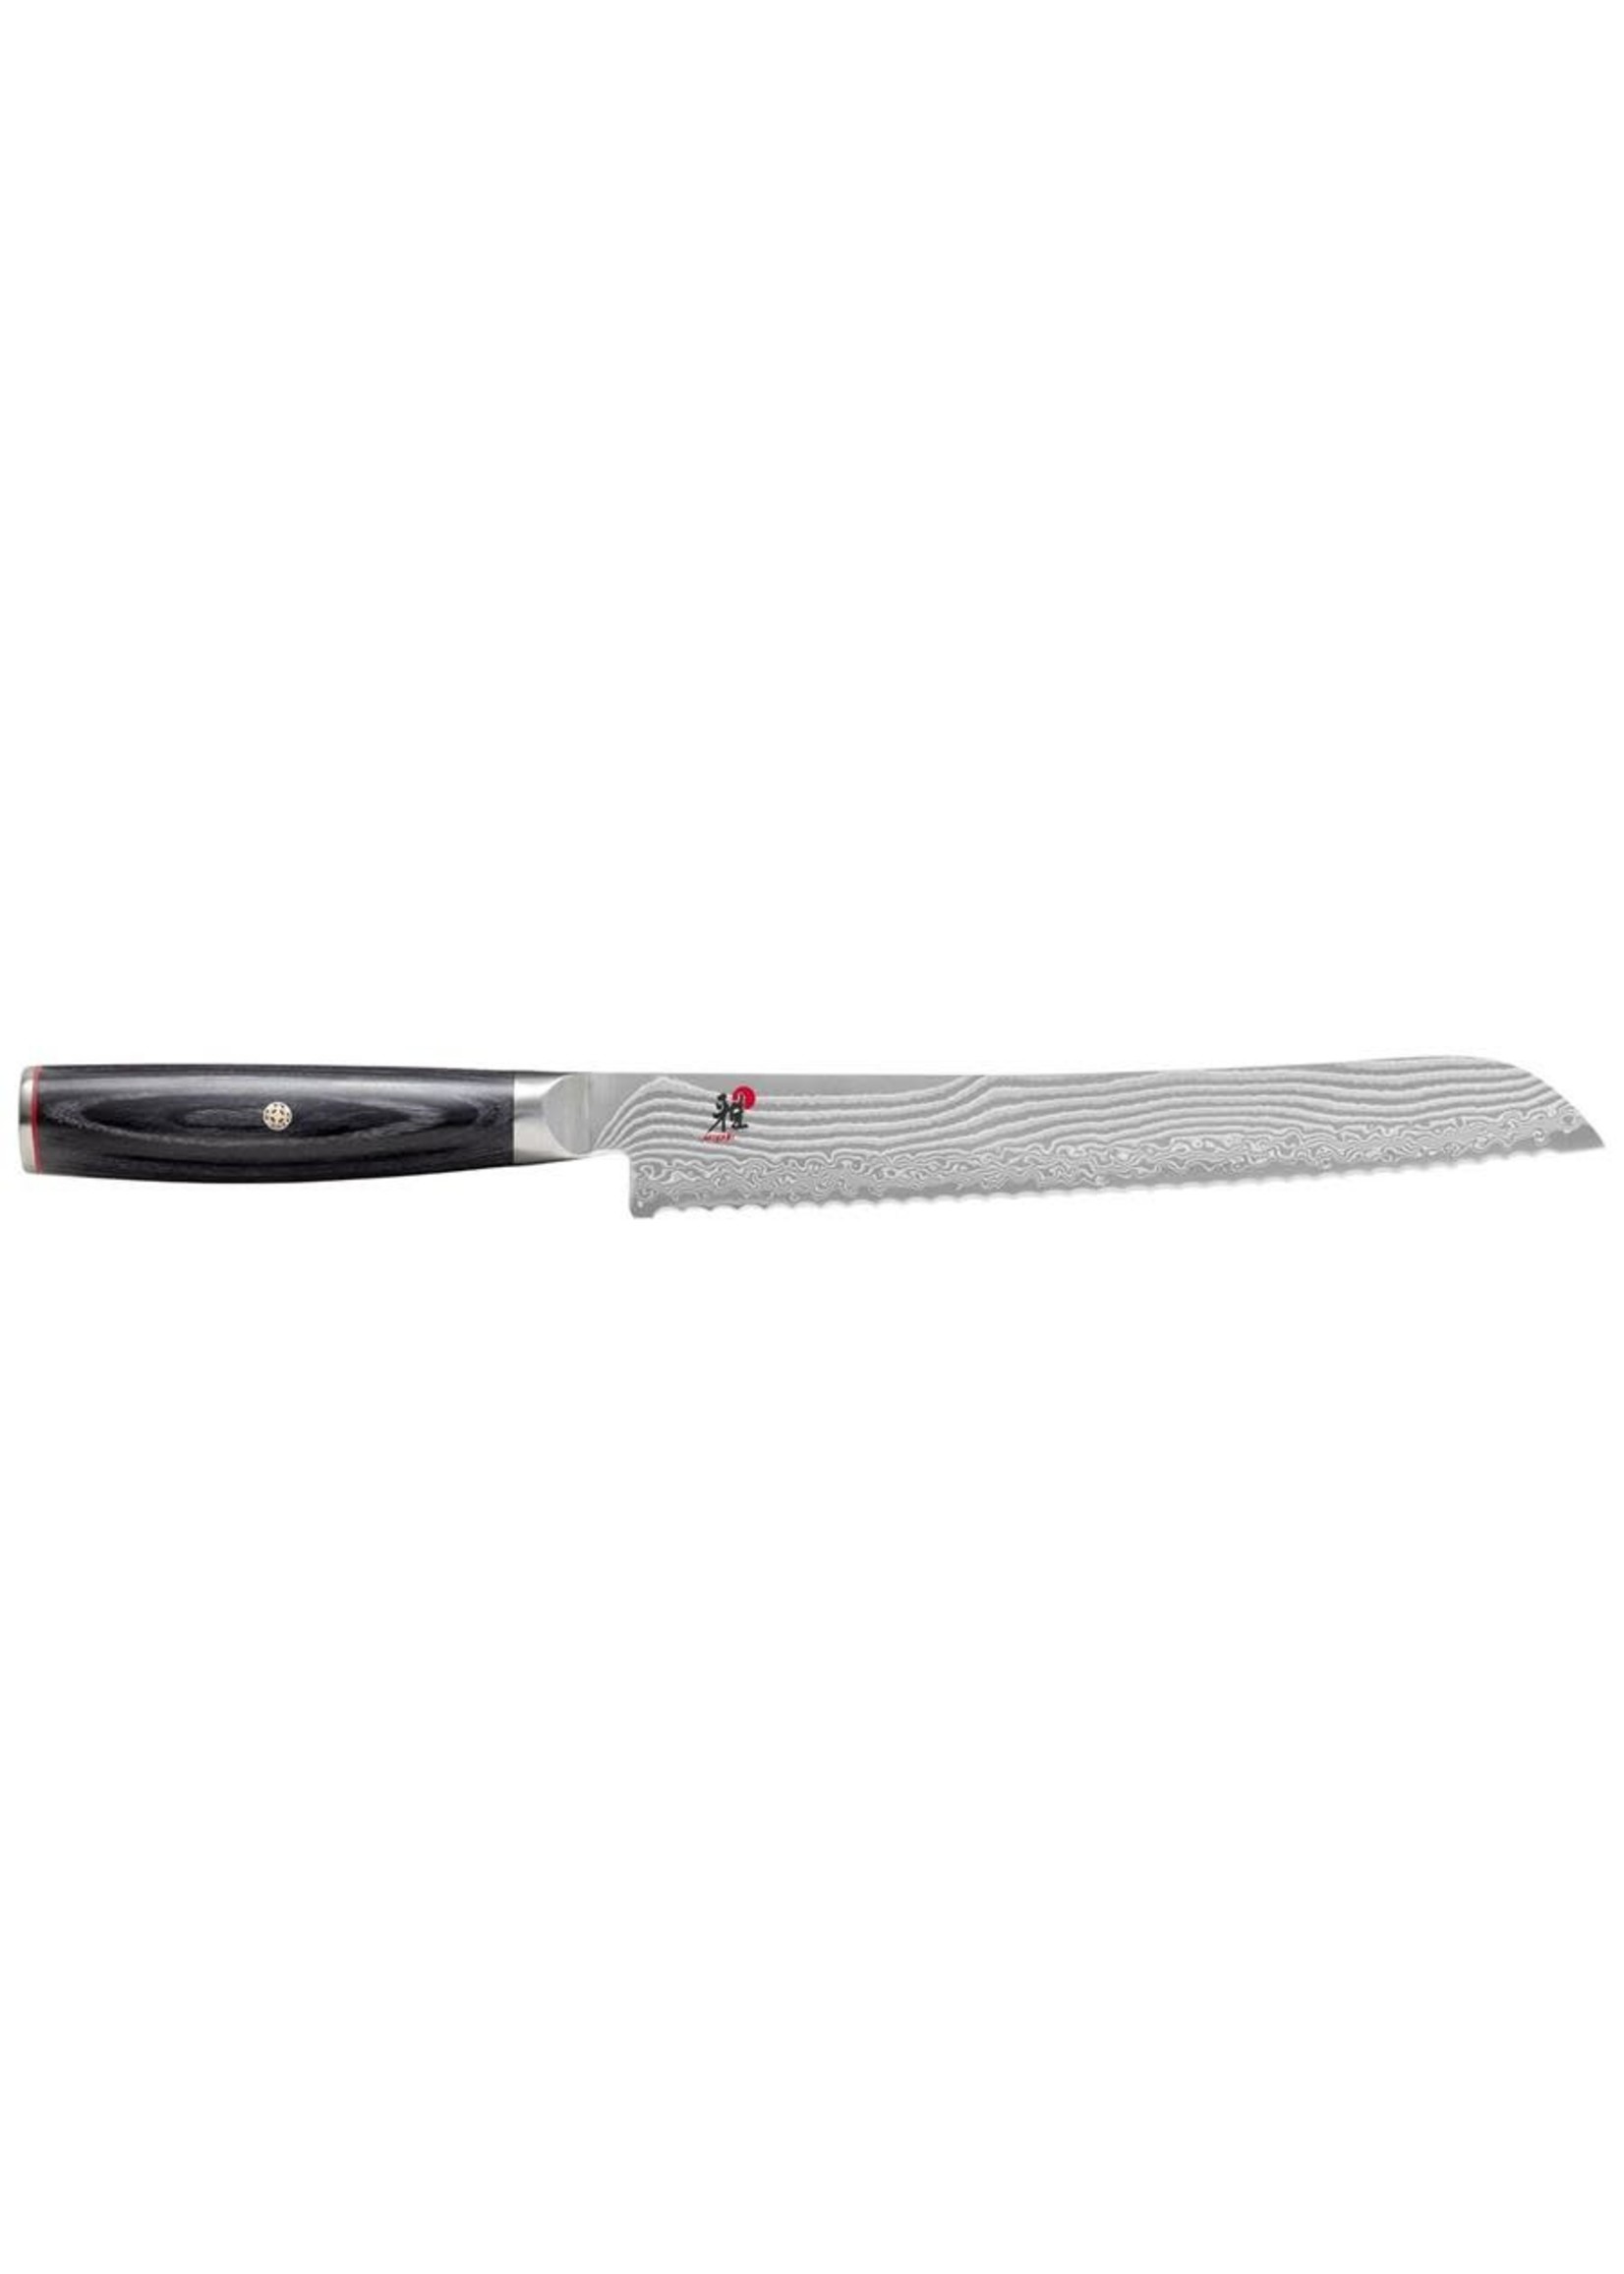 Miyabi Kaizen Bread Knife 9.5"